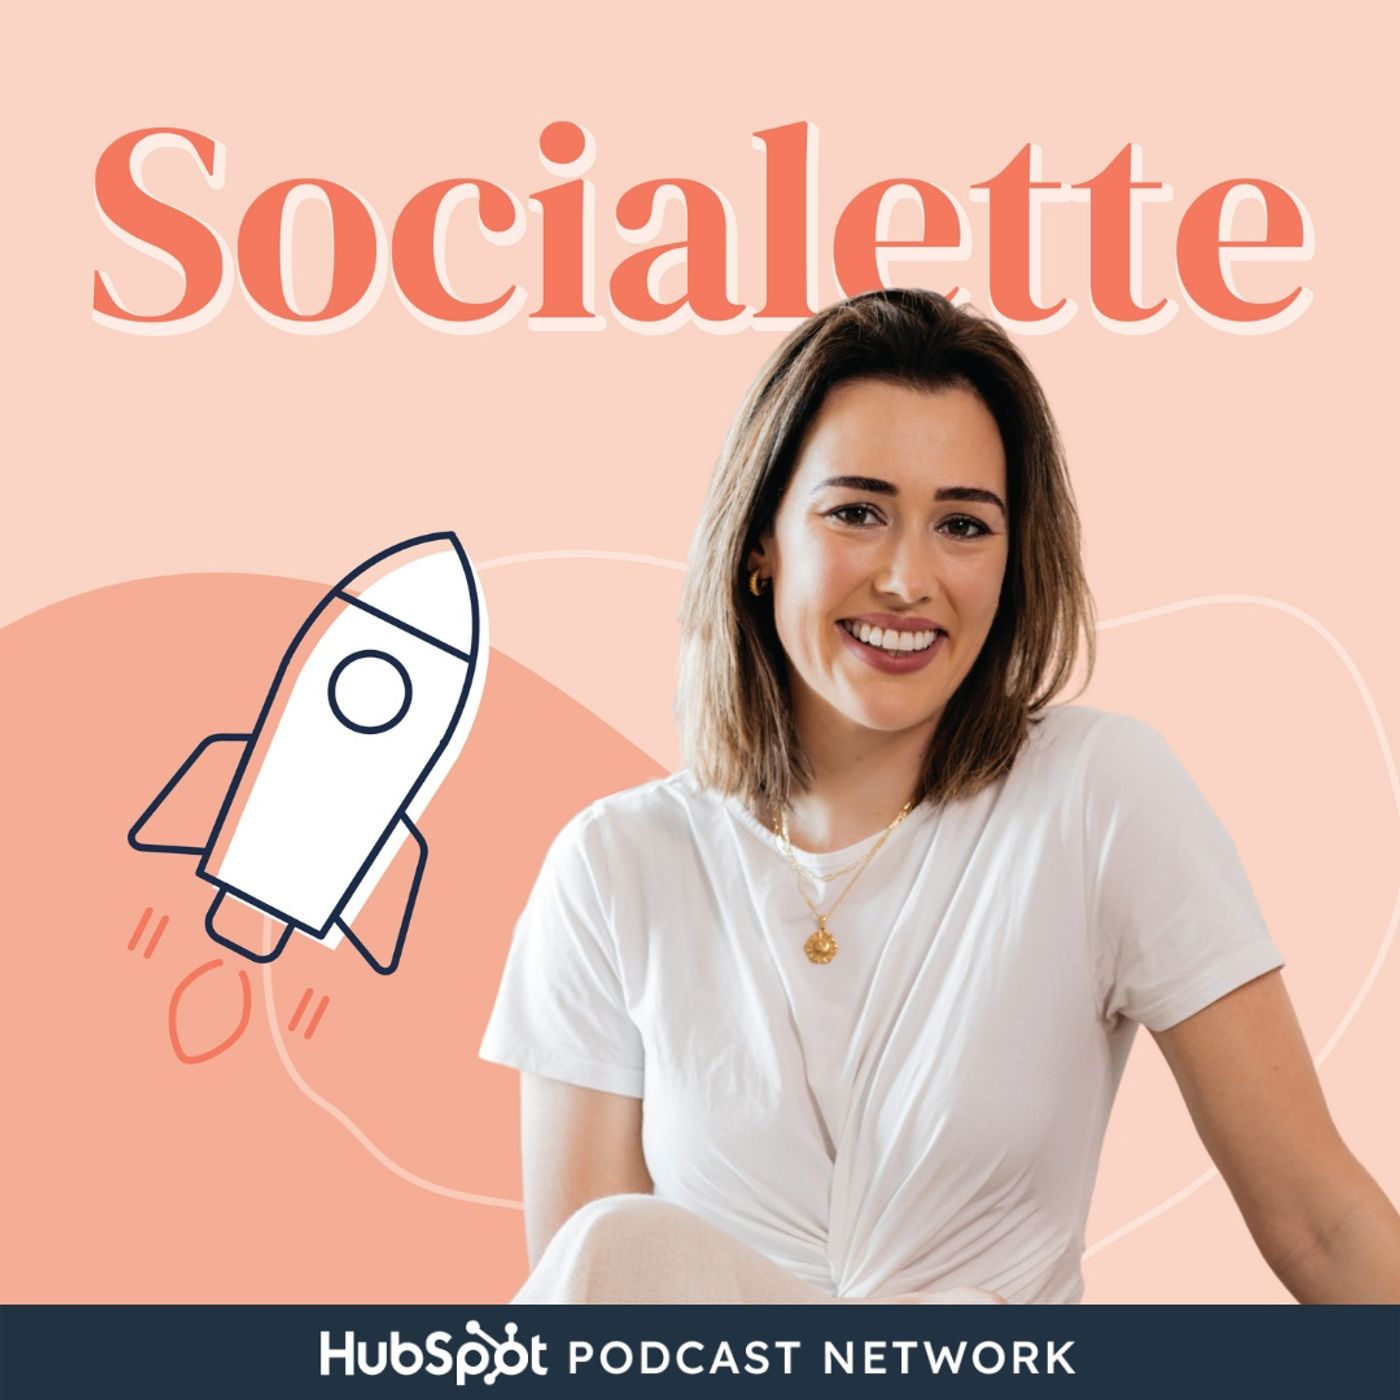 Socialette: Online Marketing Podcast podcast show image